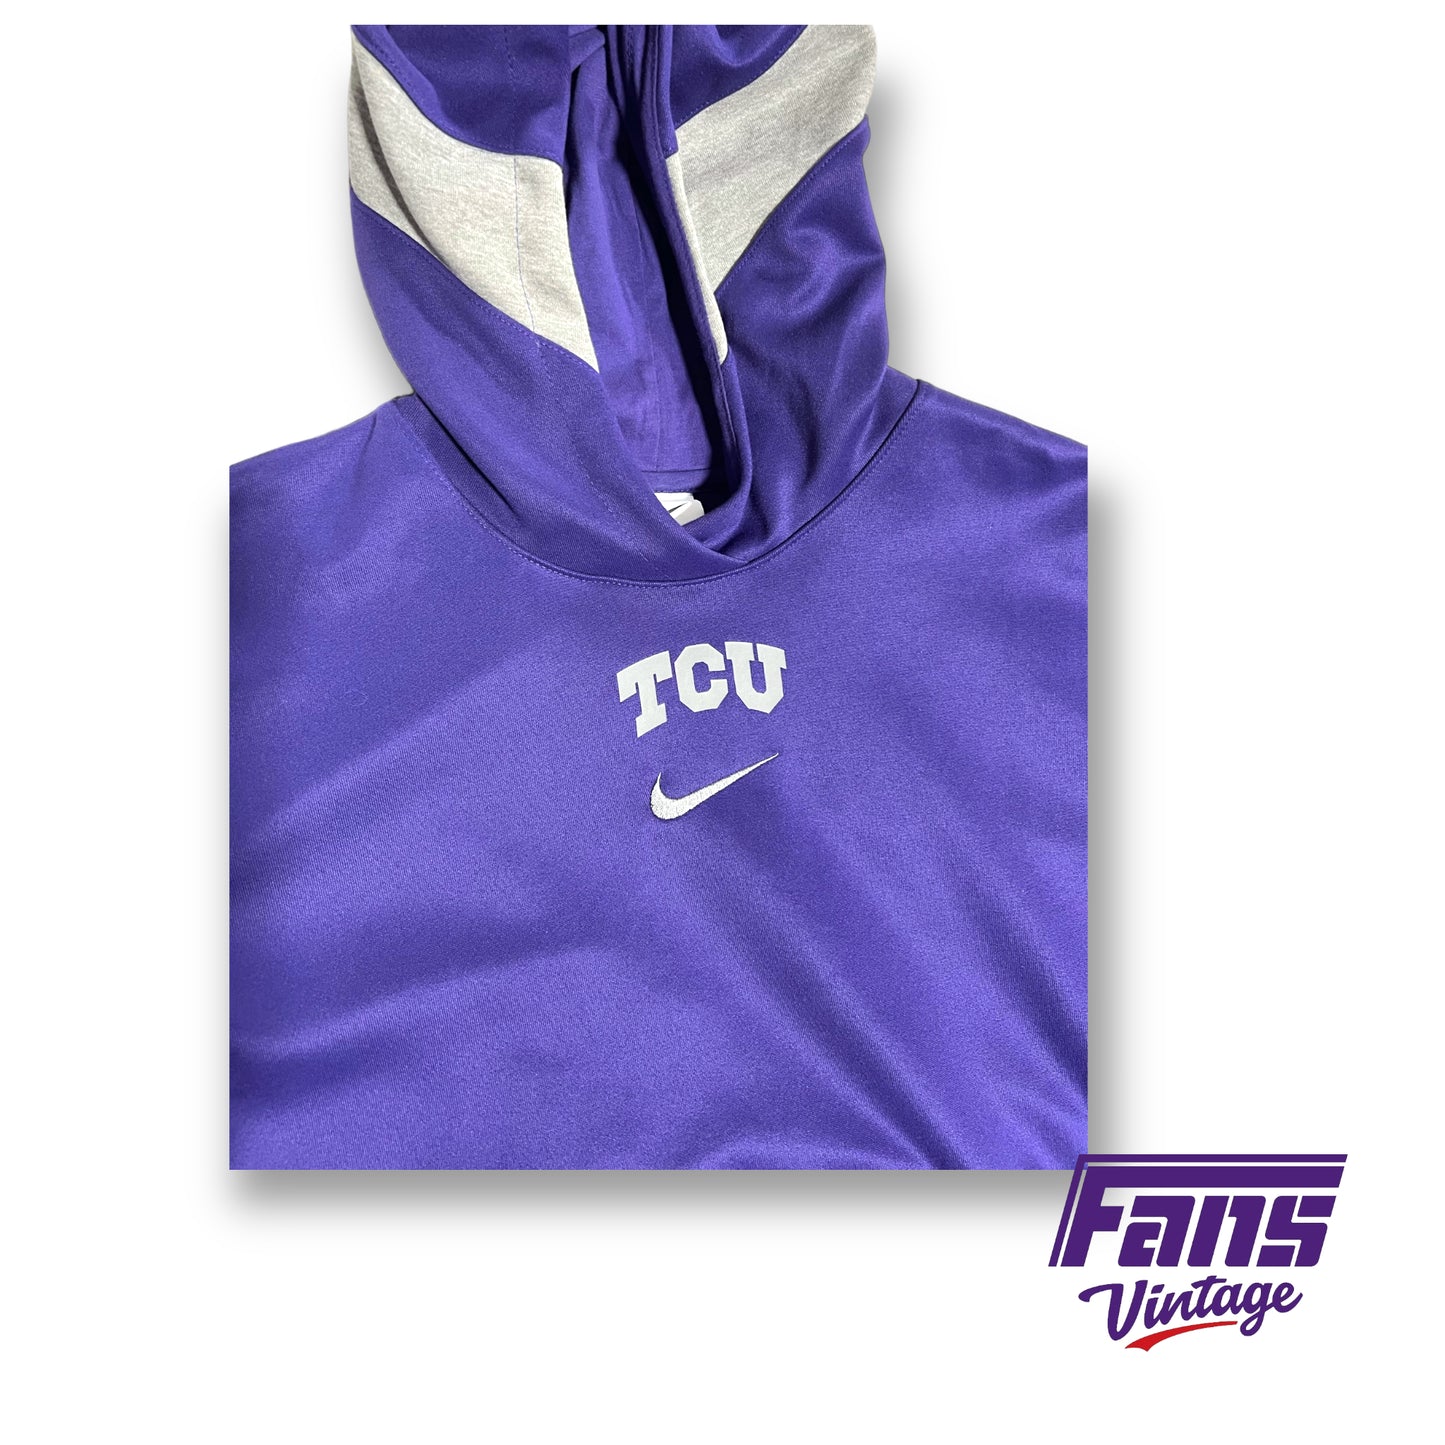 Nike TCU team issued dri-fit hoodie